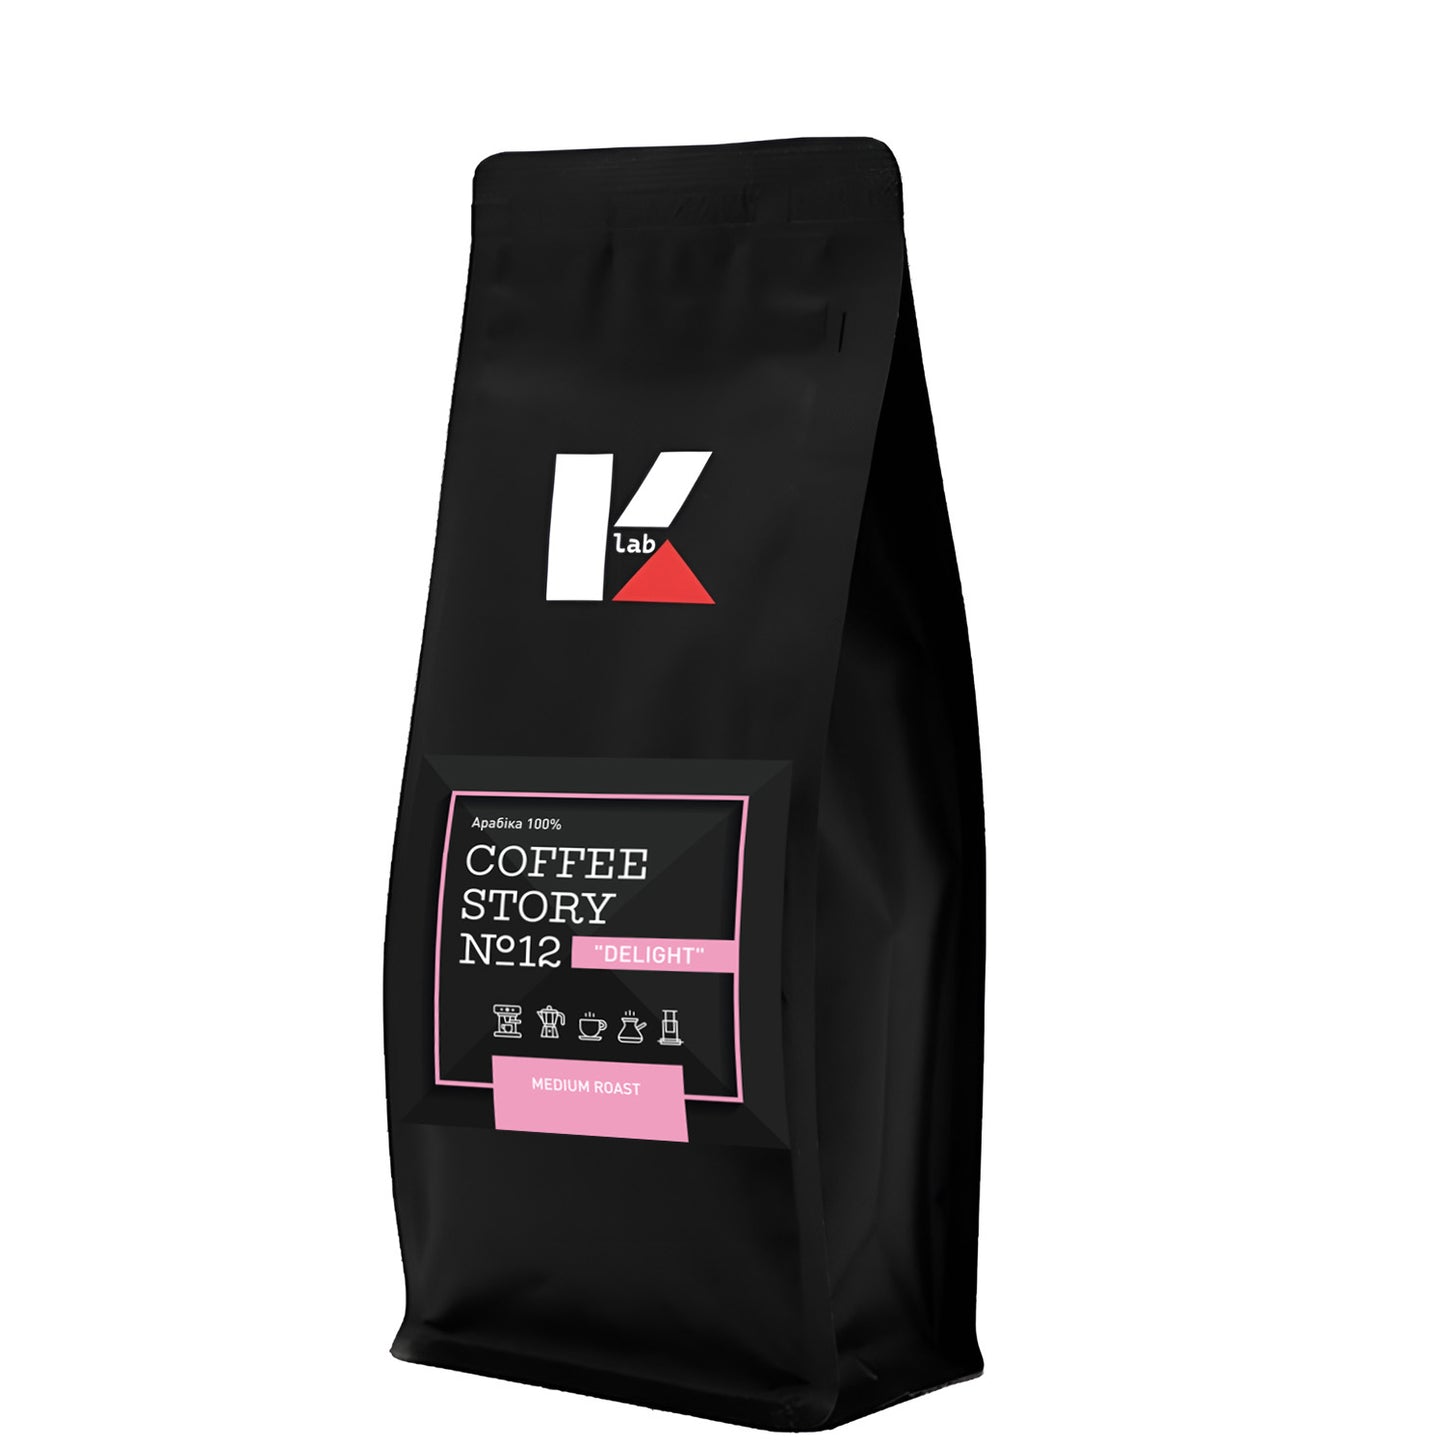 COFFEE STORY №12 - Klab (1kg front)